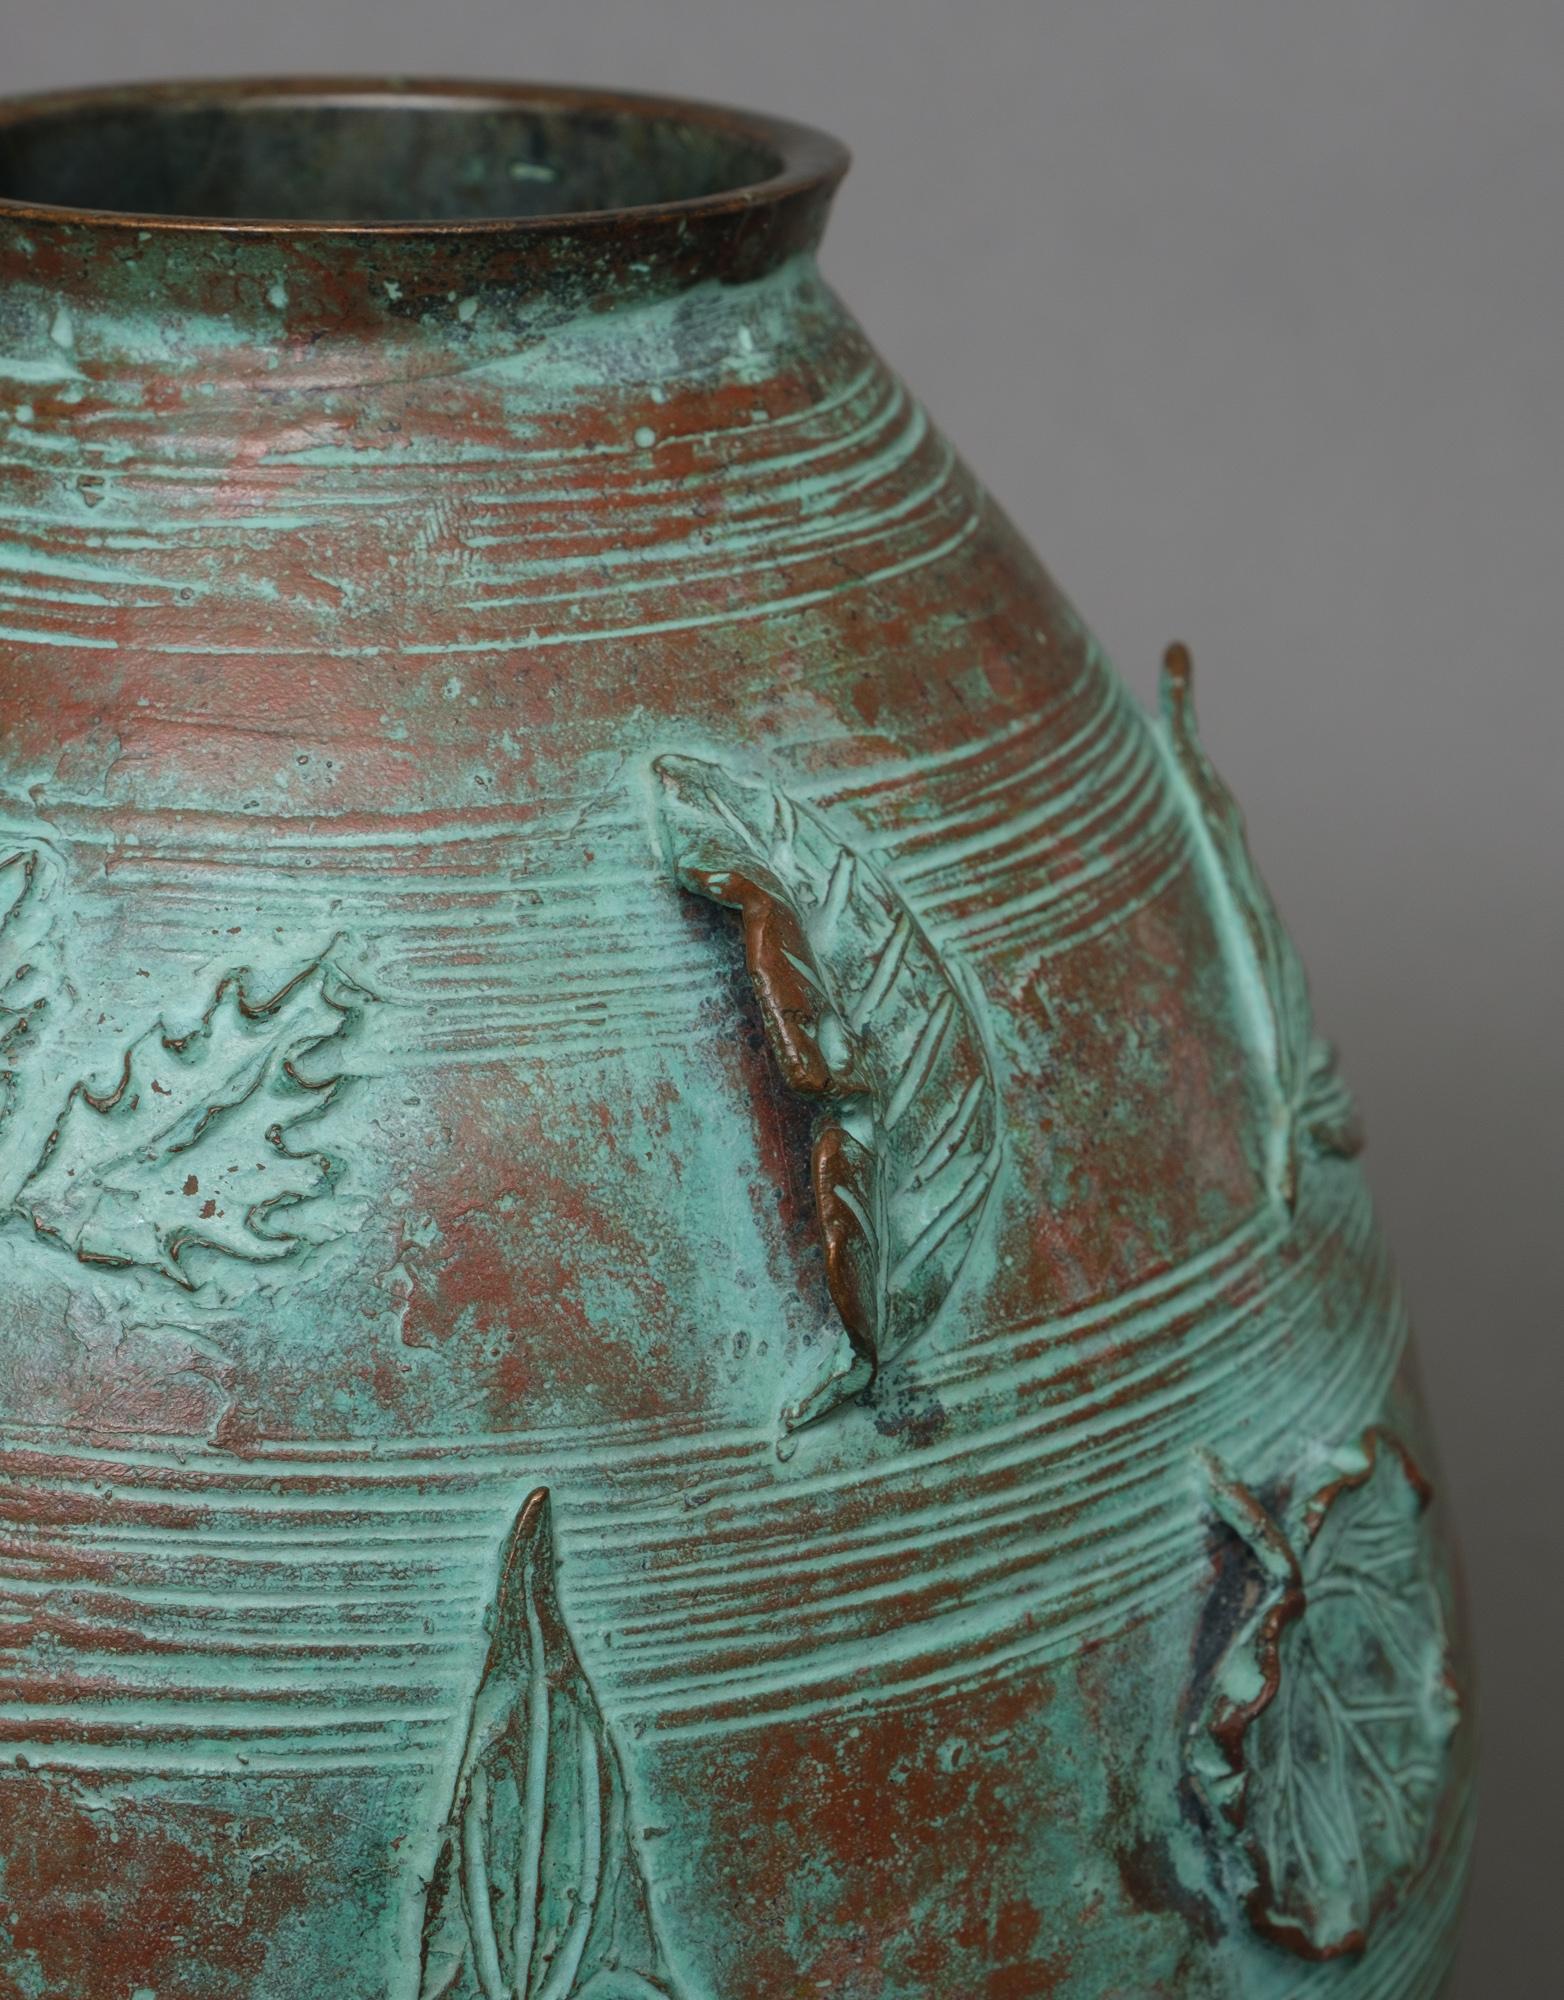 Japanese Bronze Ovoid Vase with High Relief Leaf Design by Nitten Artist Hirai Noboru 平井昇 For Sale